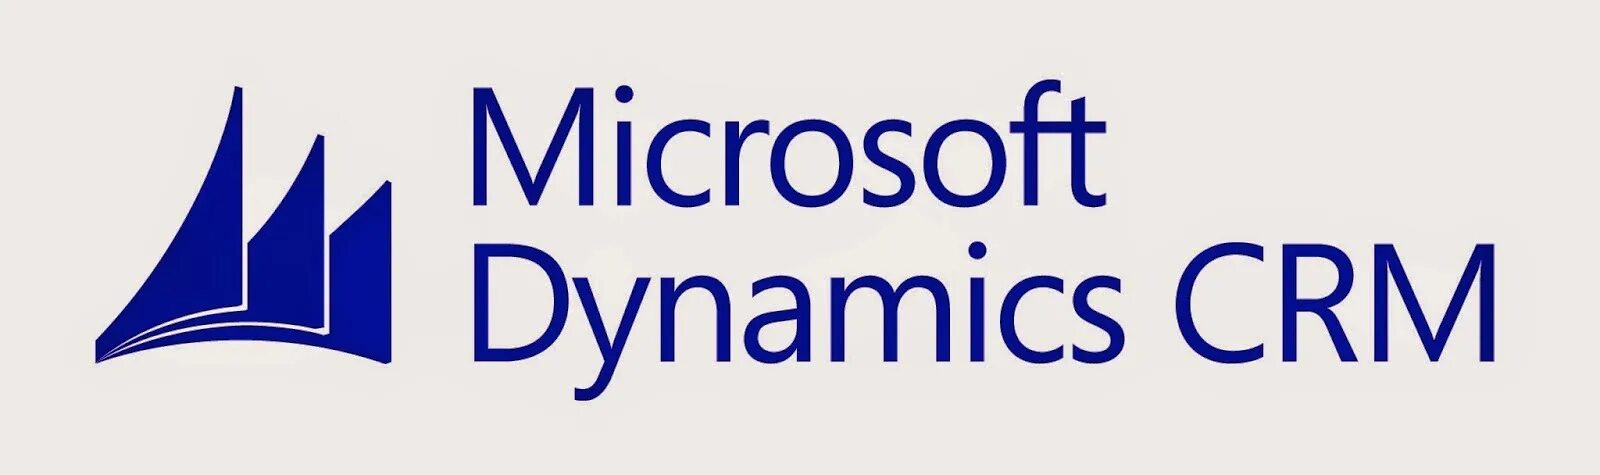 Ms dynamics. Microsoft Dynamics. Microsoft Dynamics CRM. Microsoft Dynamics logo. Microsoft Dynamics CRM 2016.